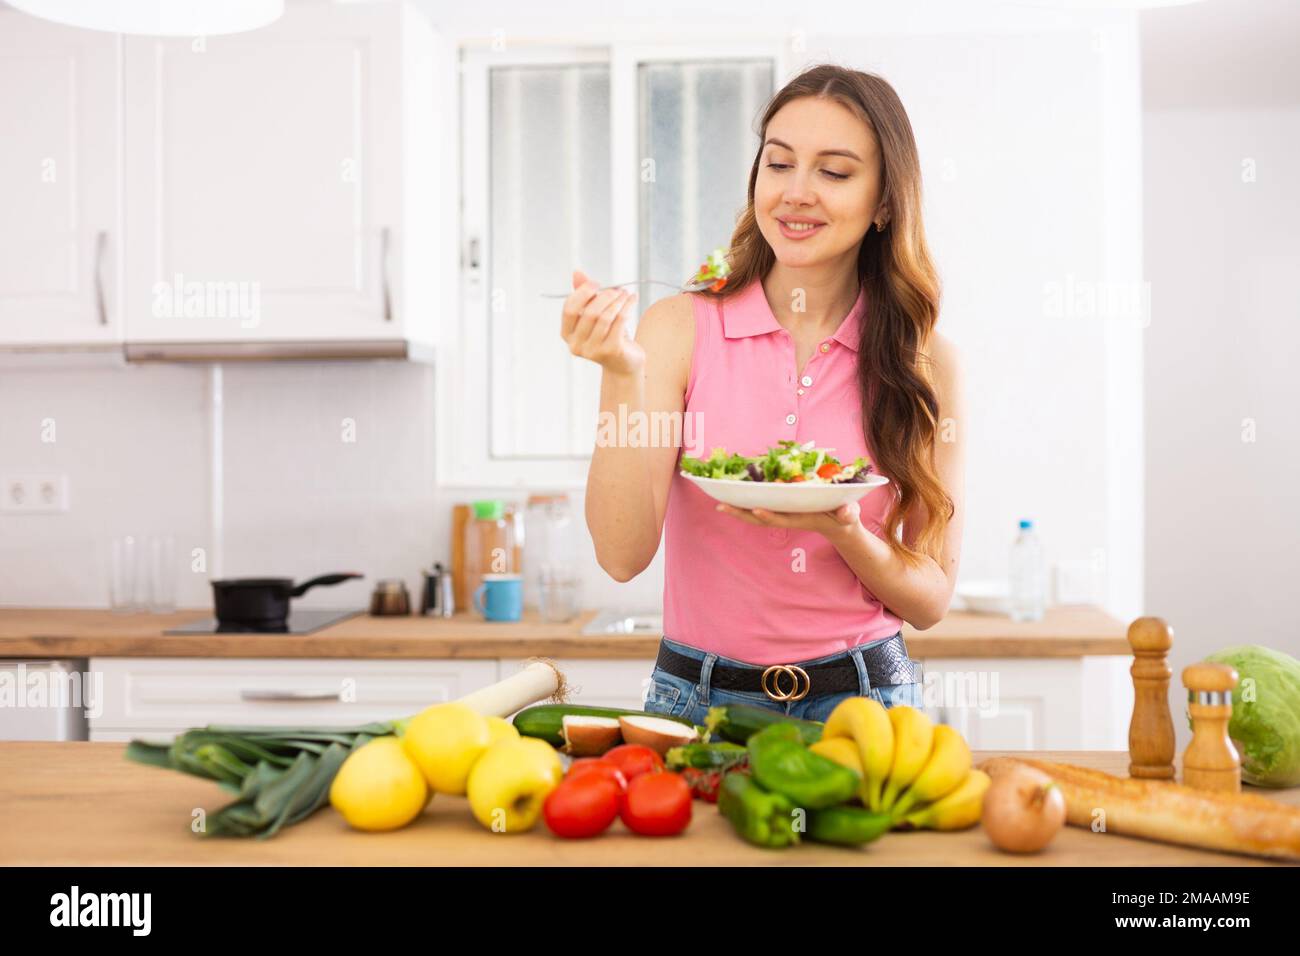 Smiling young woman enjoying salad at home Stock Photo